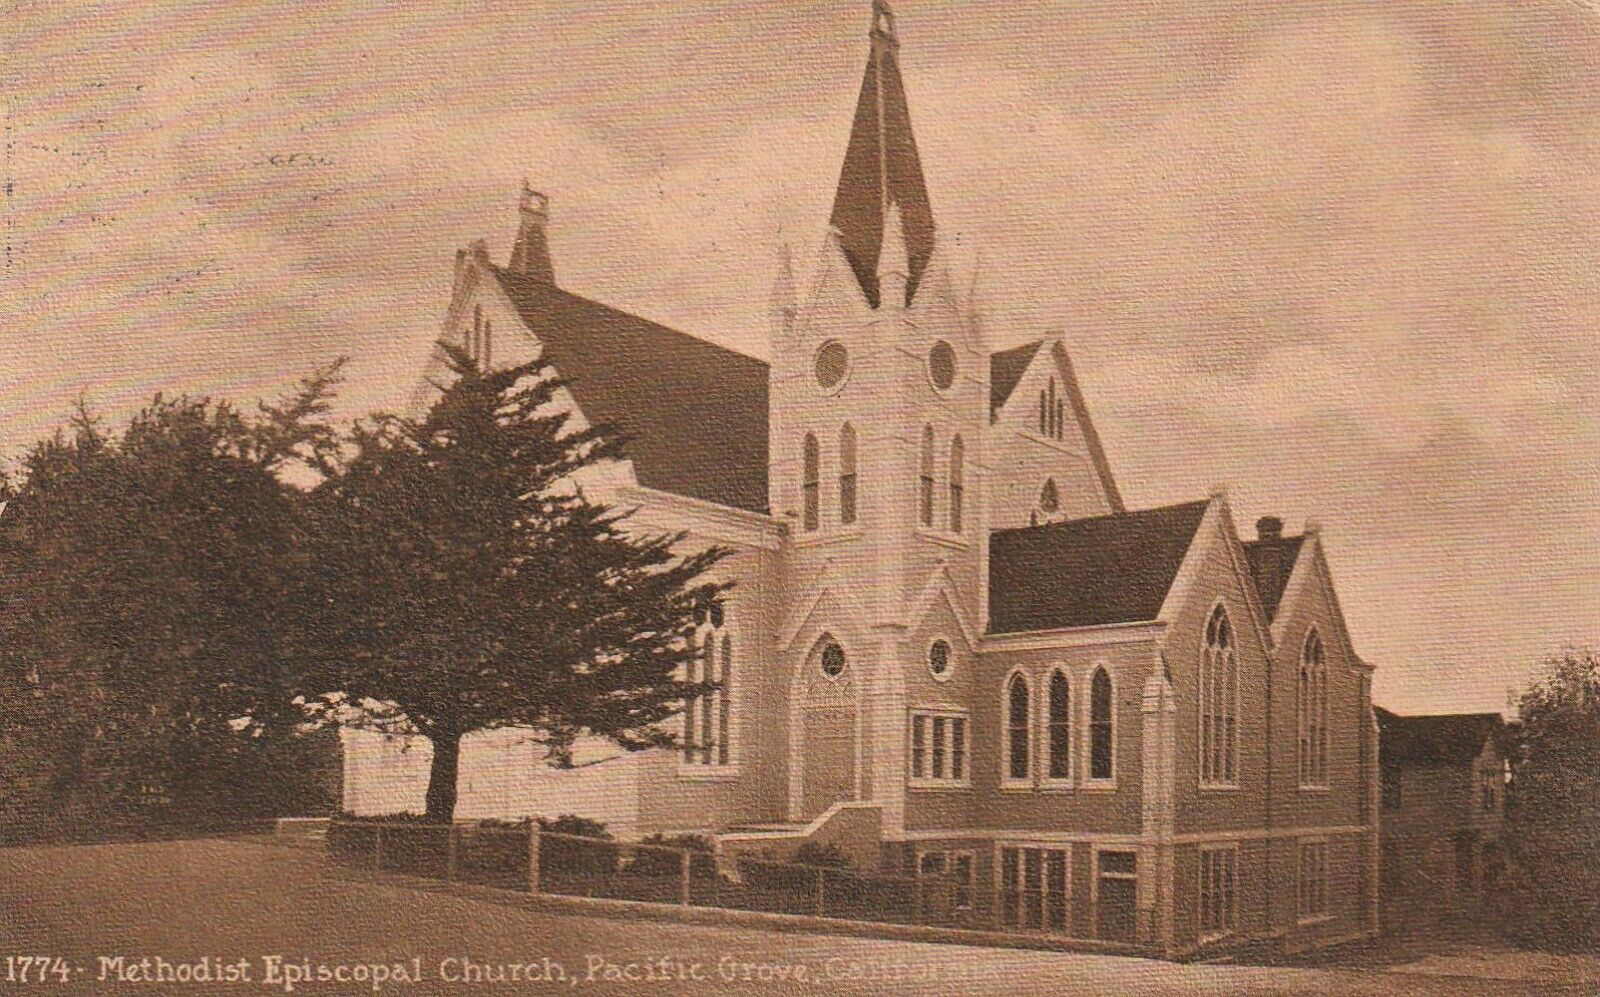 Methodist Episcopal Church in Pacific Grove California CA Vintage Photo Postcard